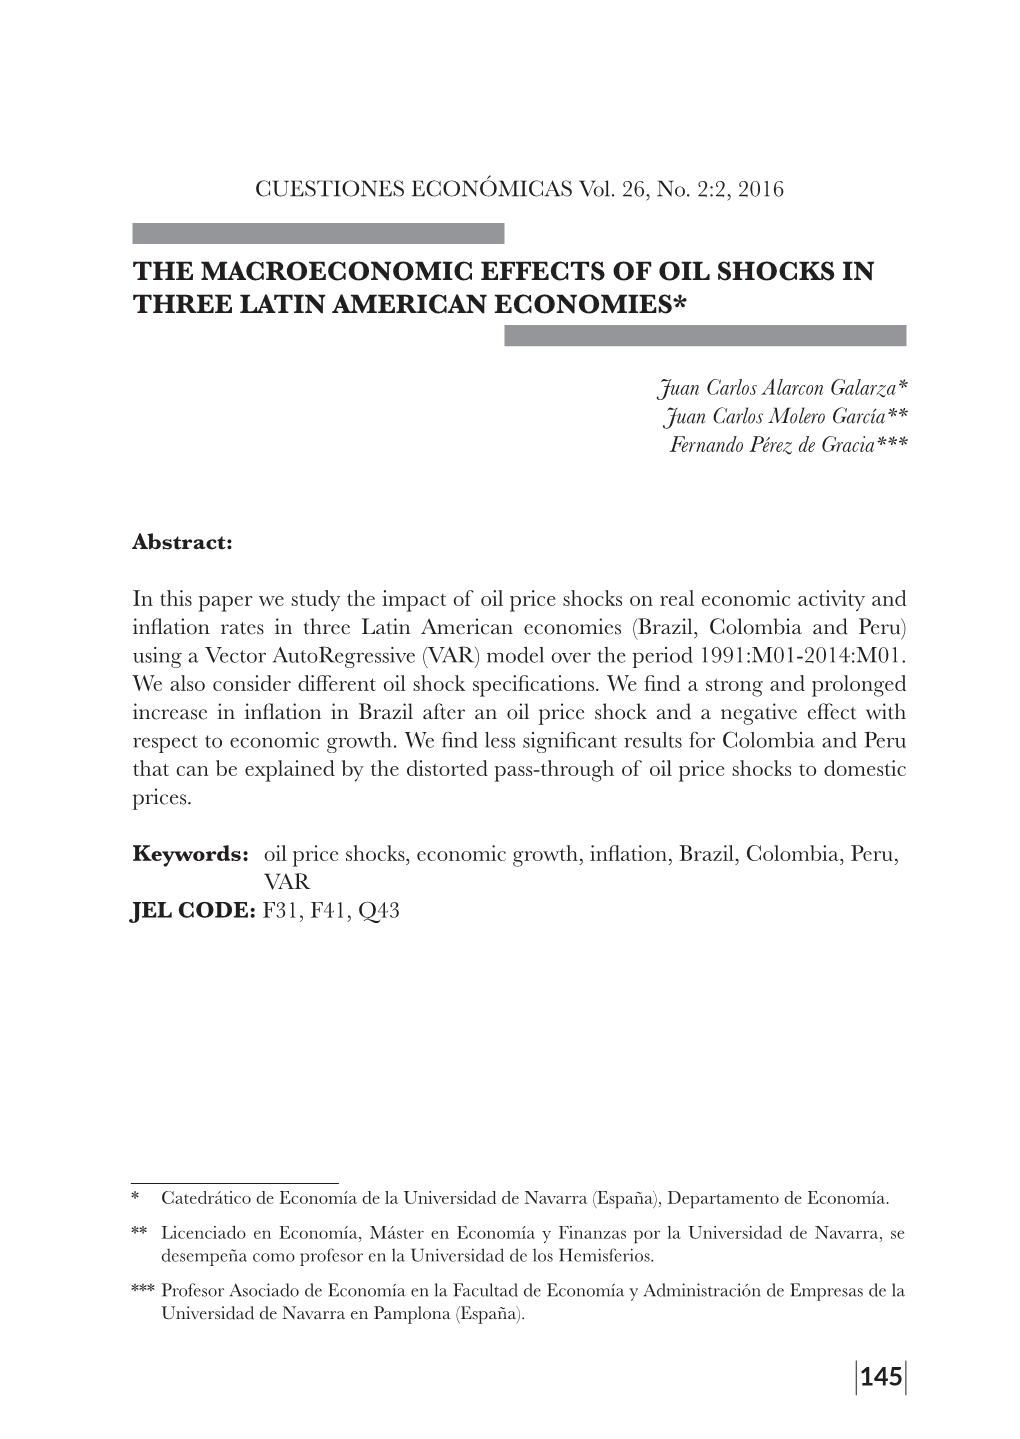 The Macroeconomic Effects of Oil Shocks in Three Latin American Economies*